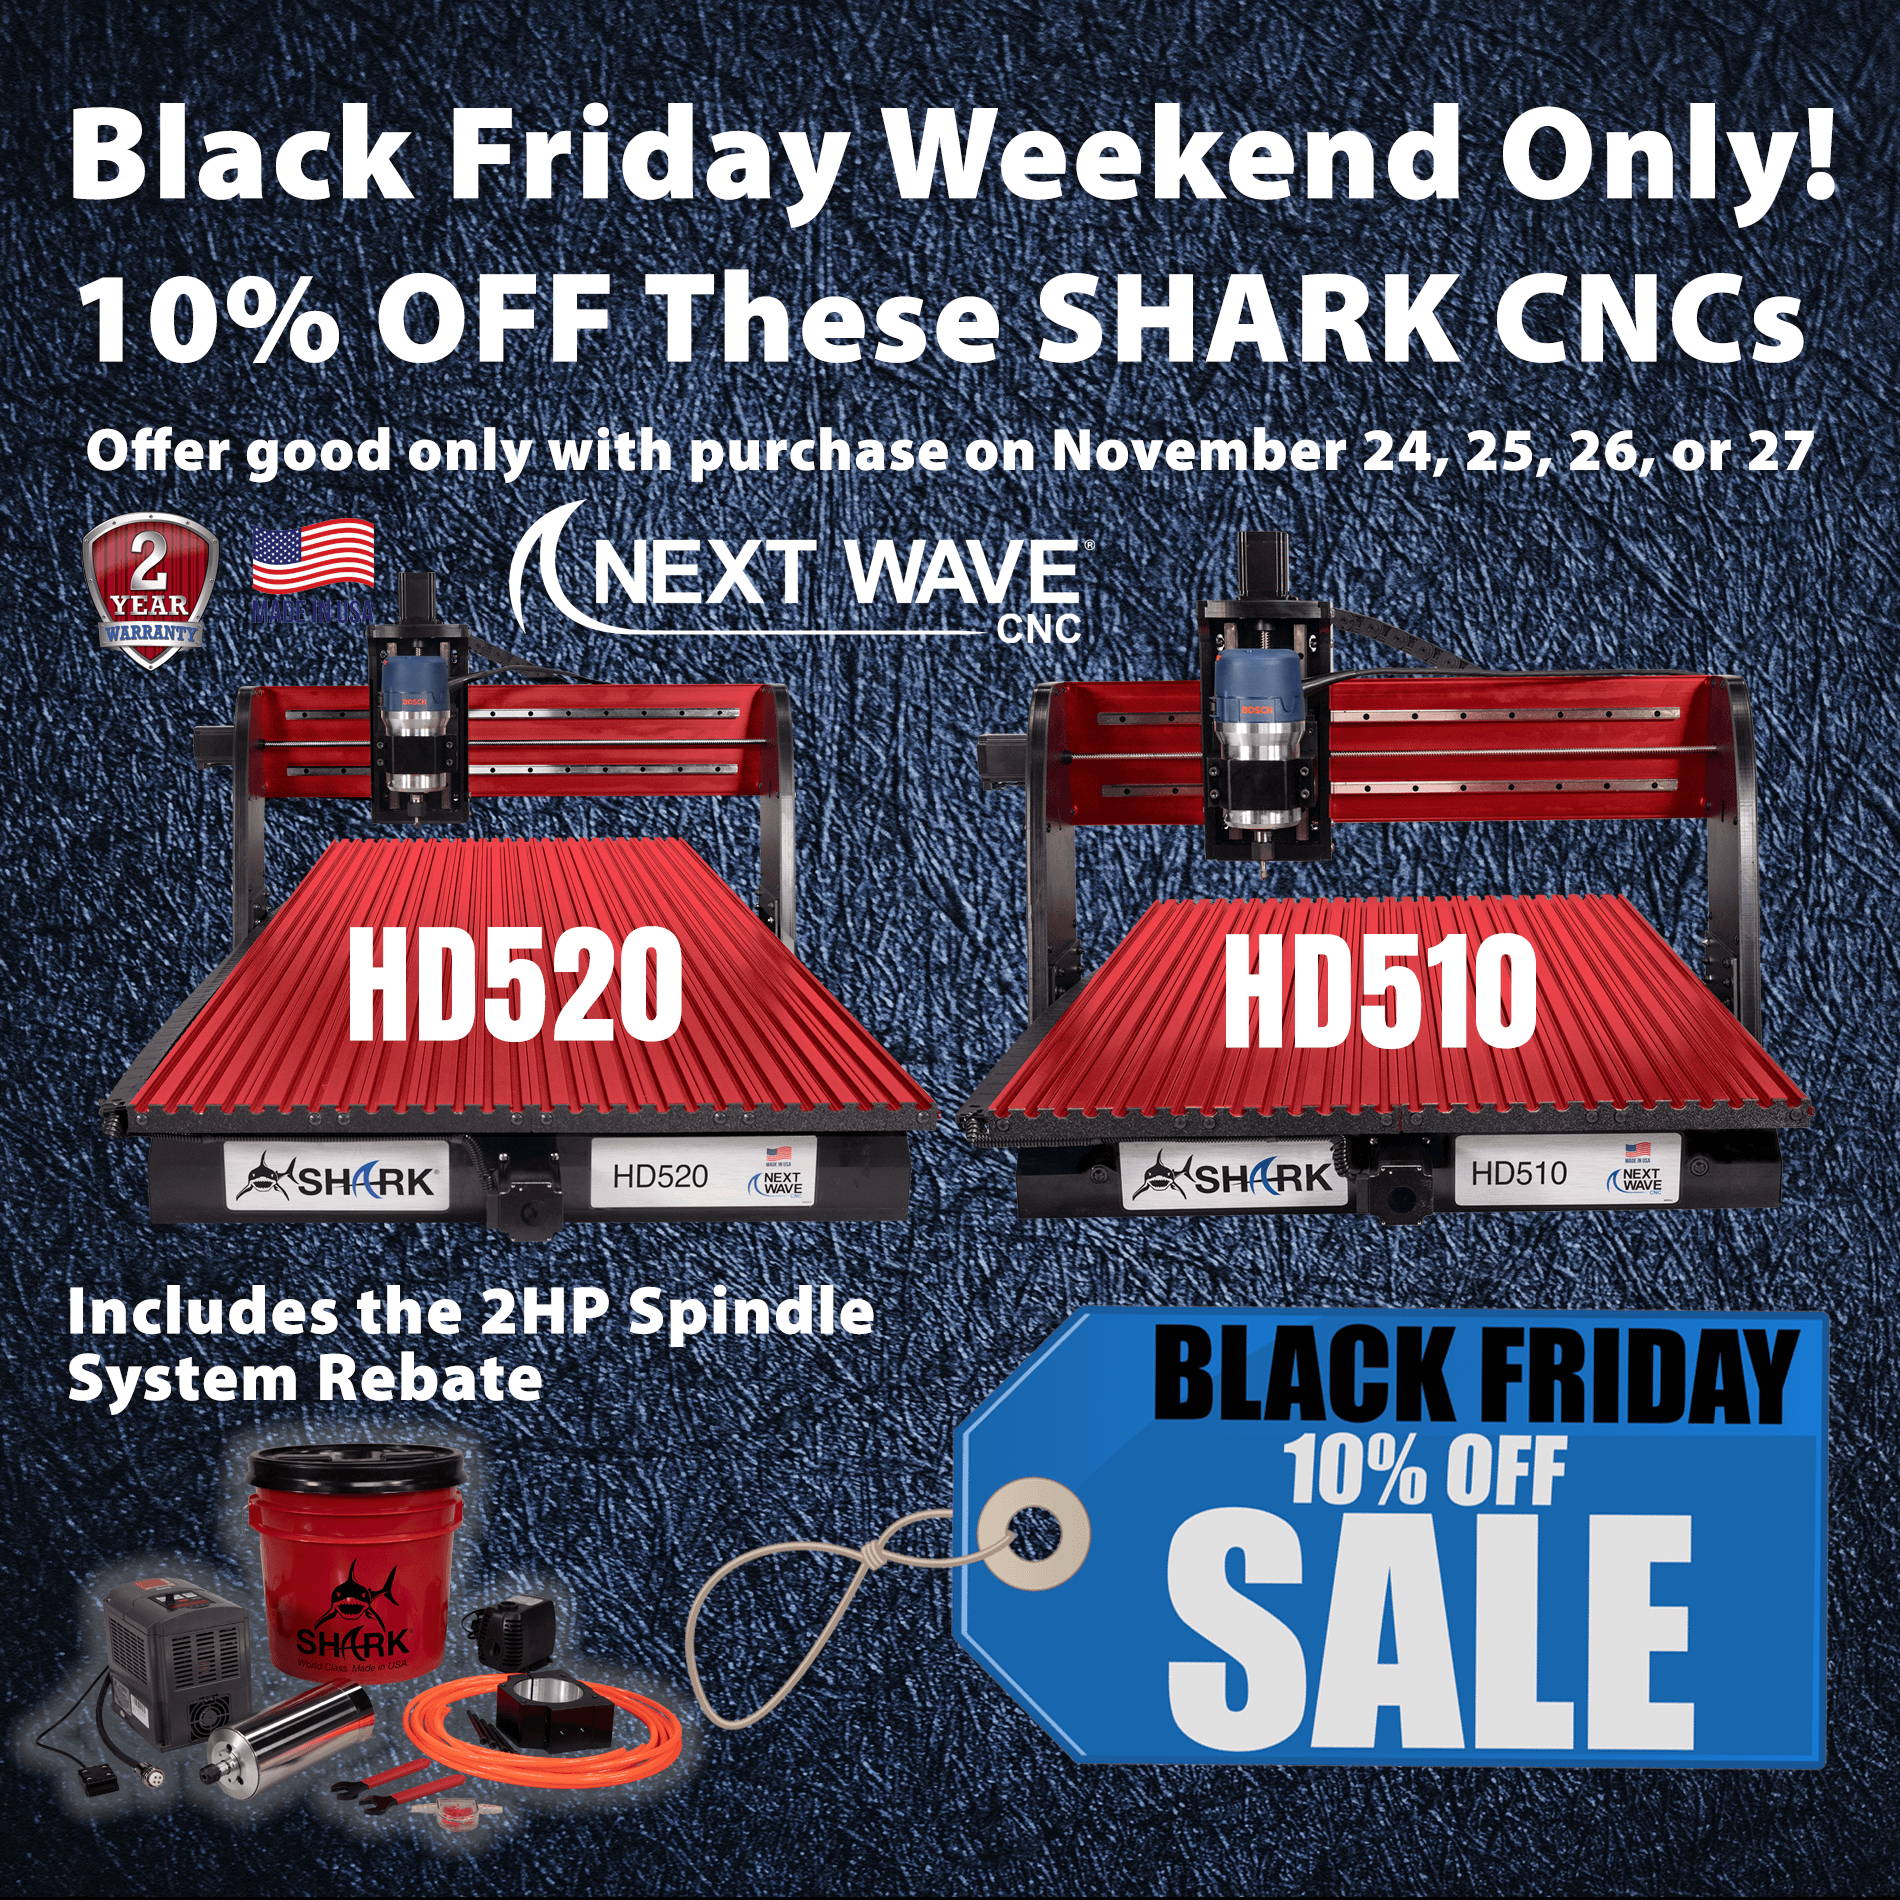 Black Friday 10% Off Shark CNC's 